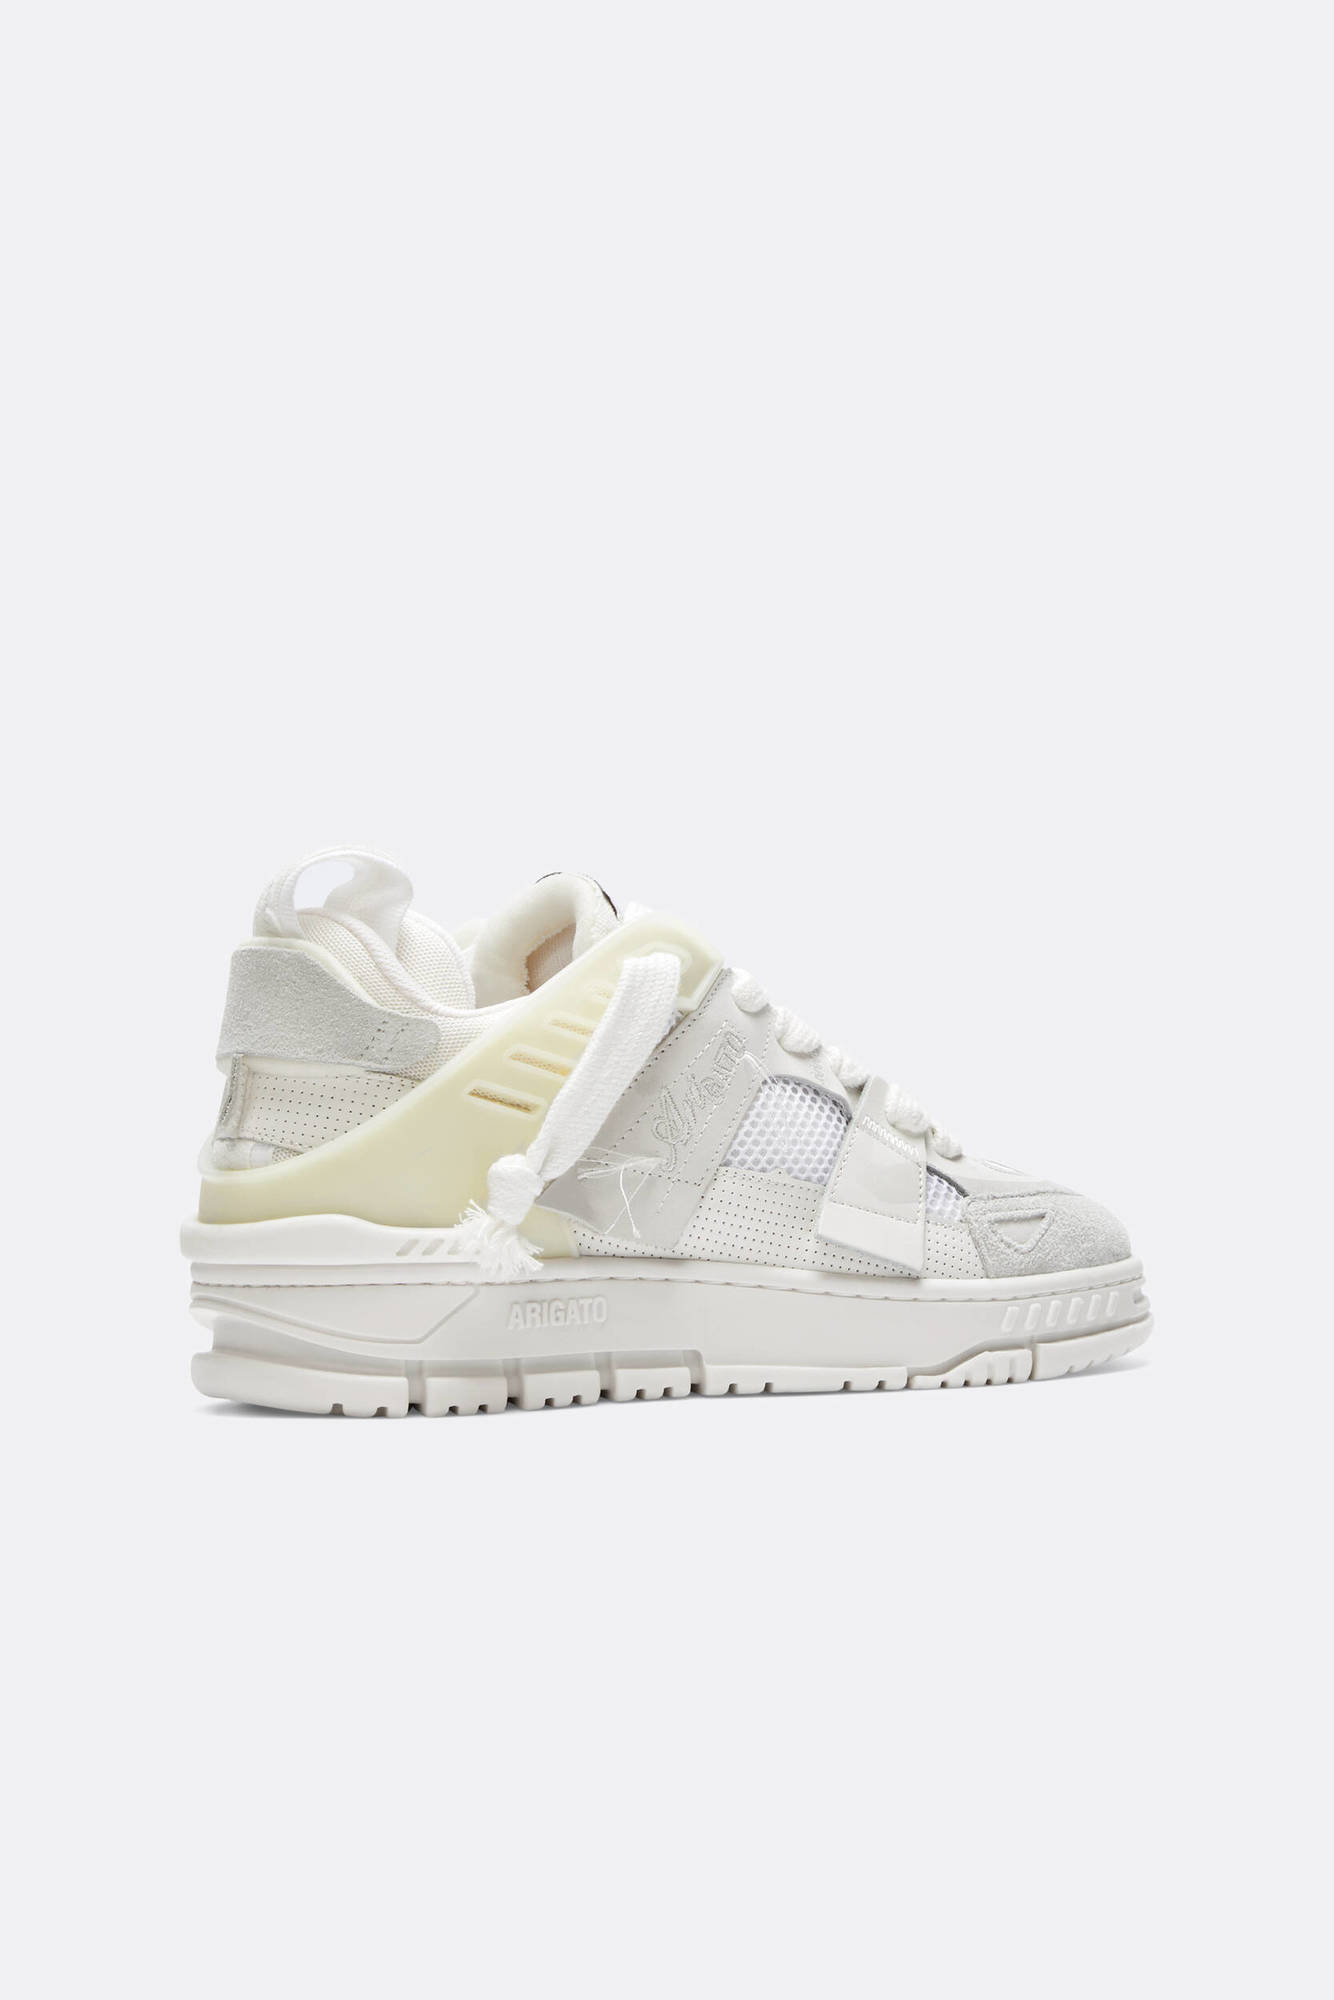 AXEL ARIGATO Area Patchwork Sneaker in White/White 44